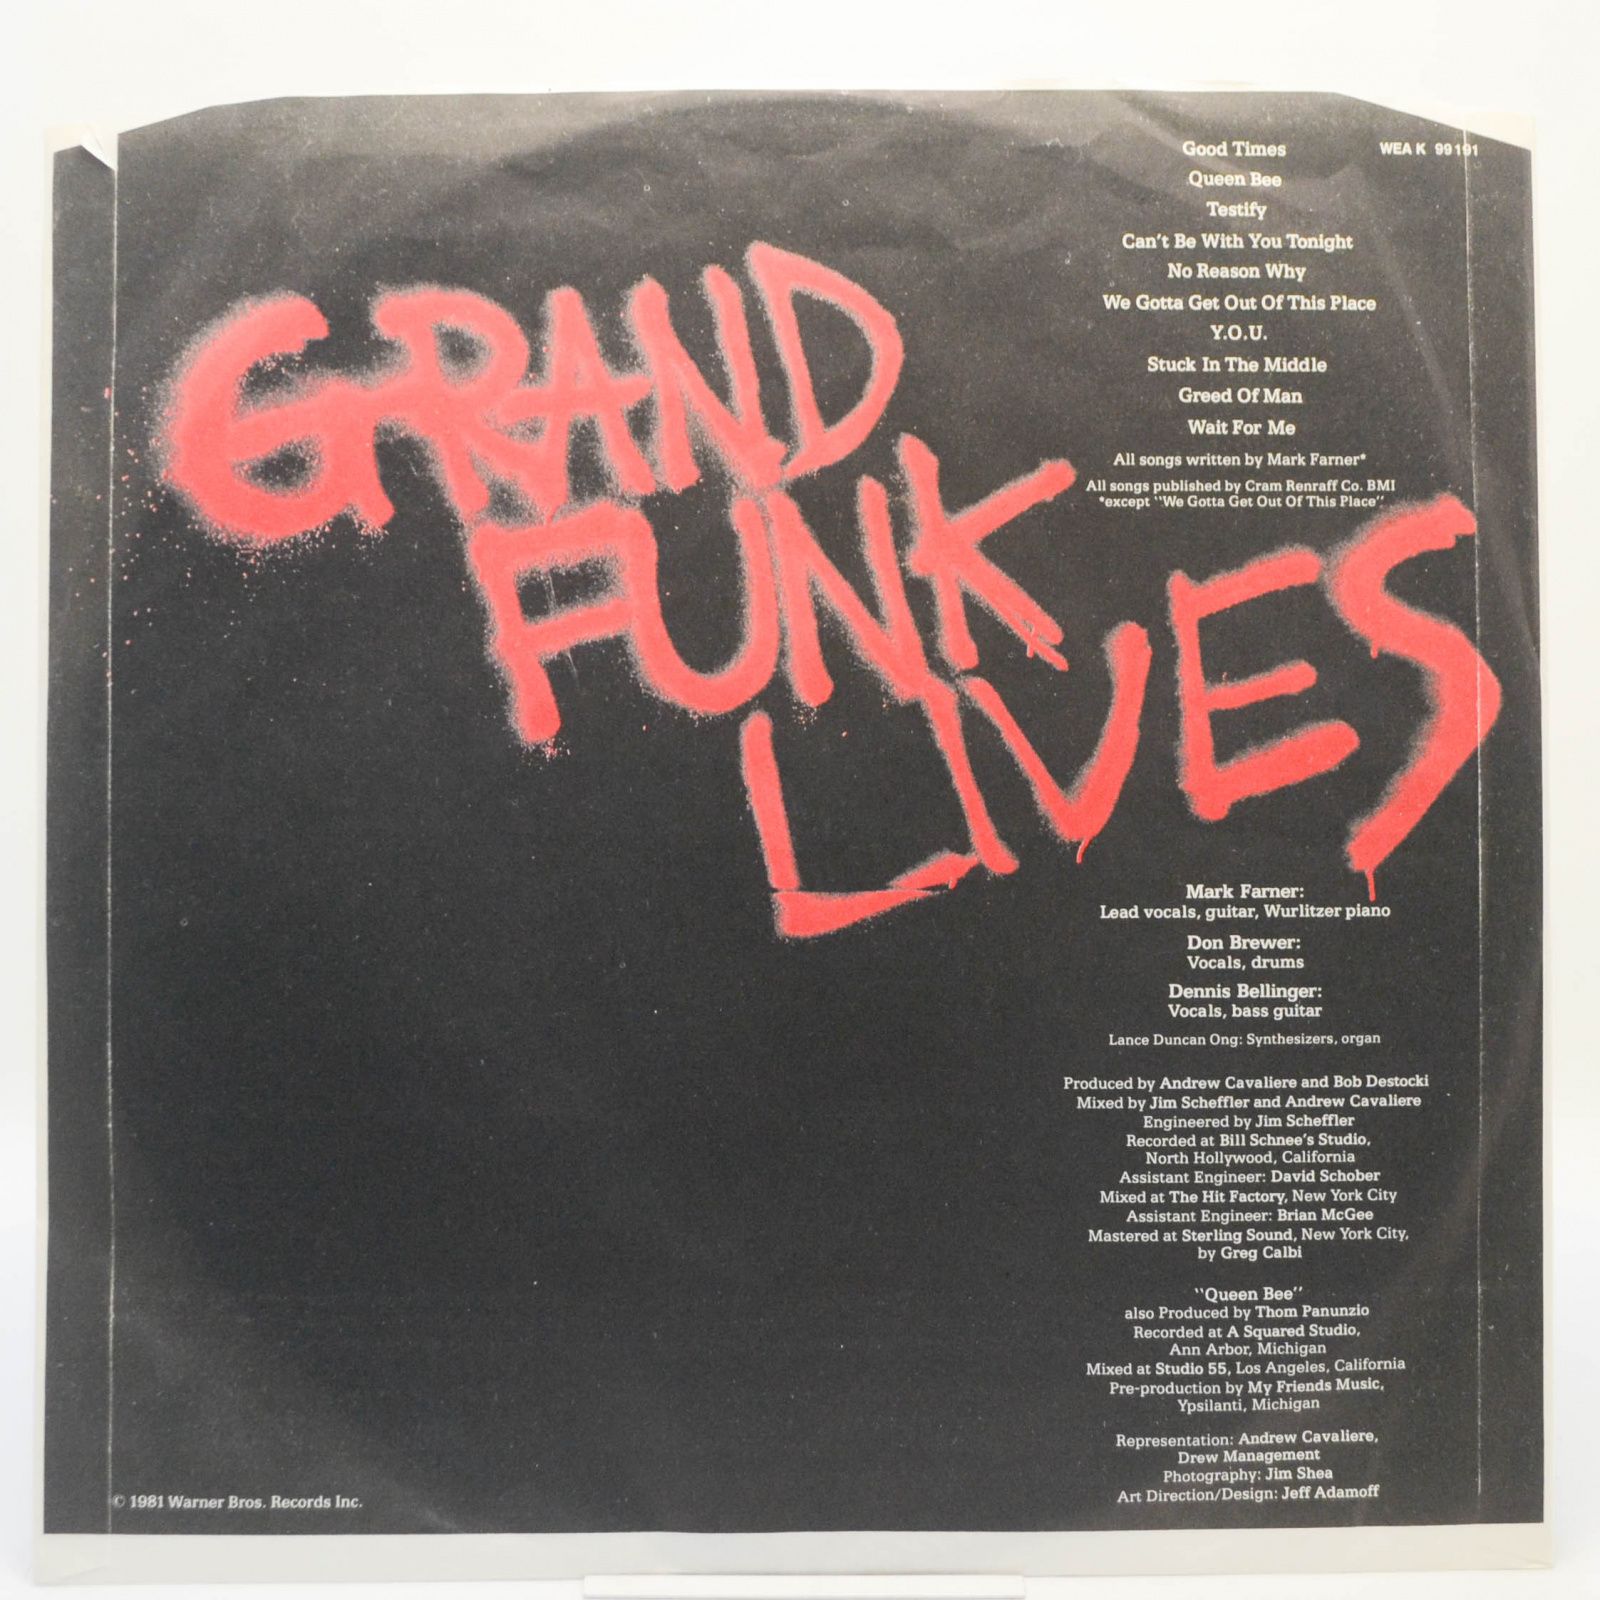 Grand Funk Railroad — Grand Funk Lives, 1981